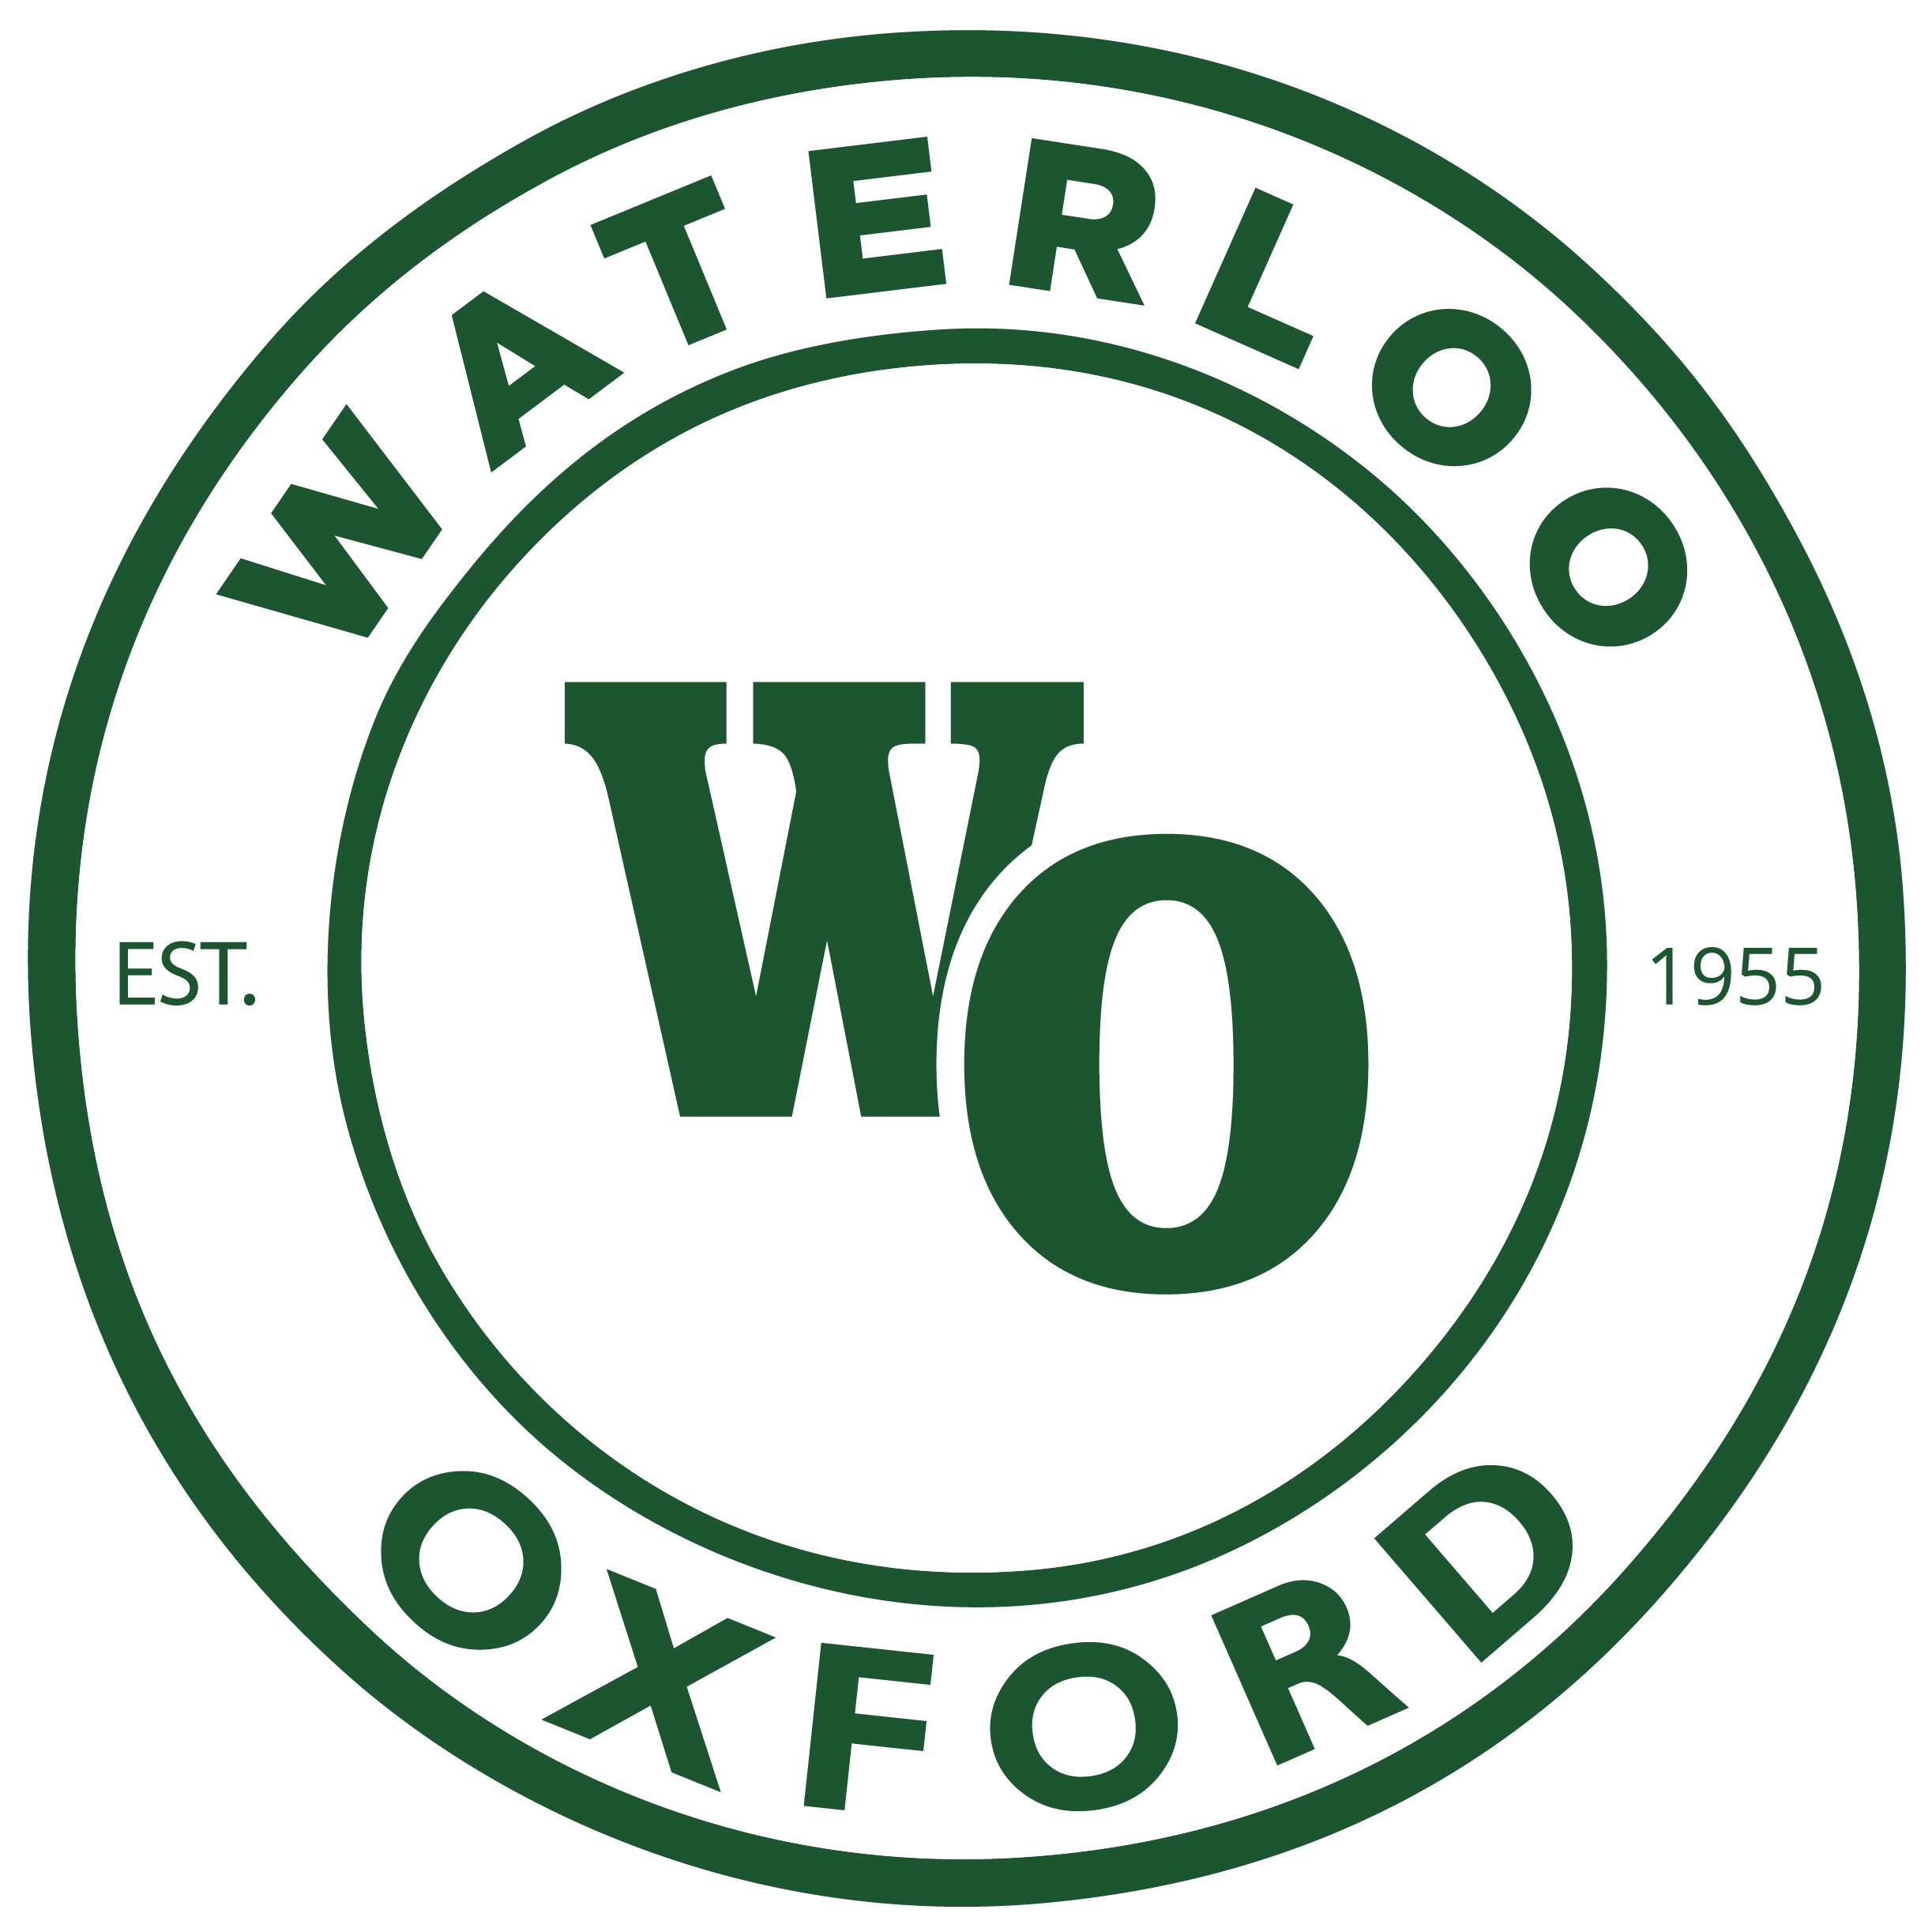 CKOW - Waterloo Oxford